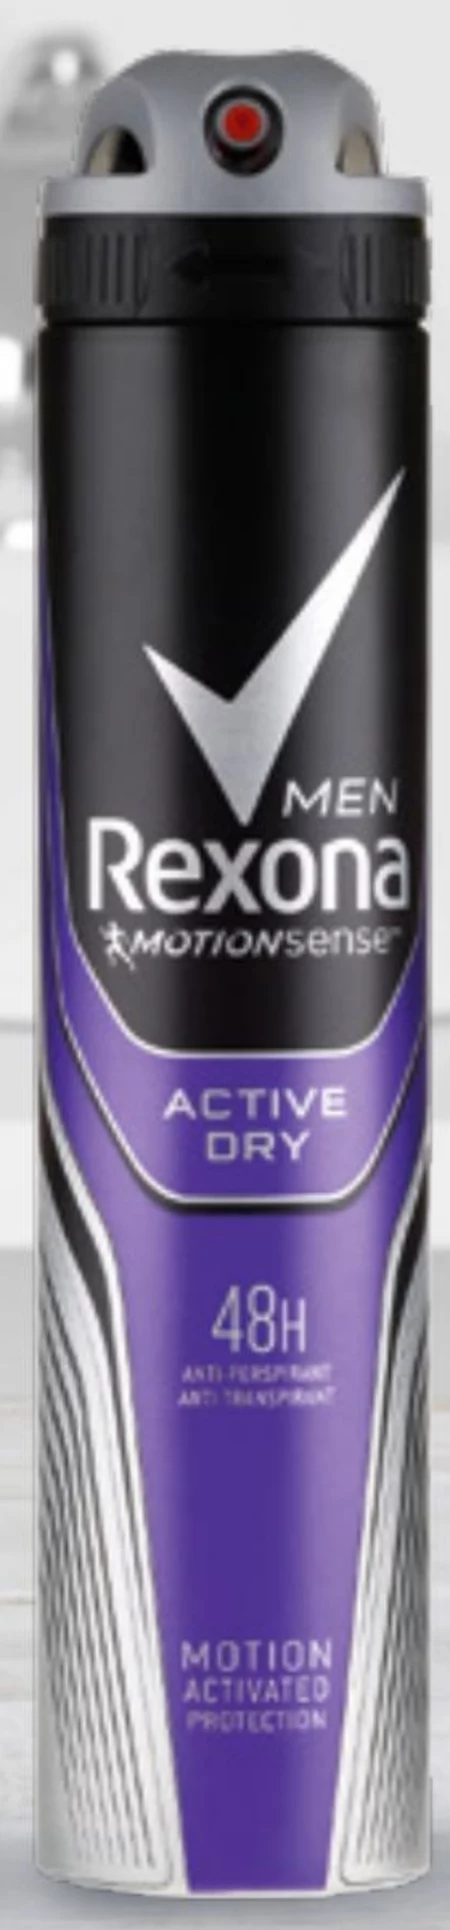 Dezodorant Rexona